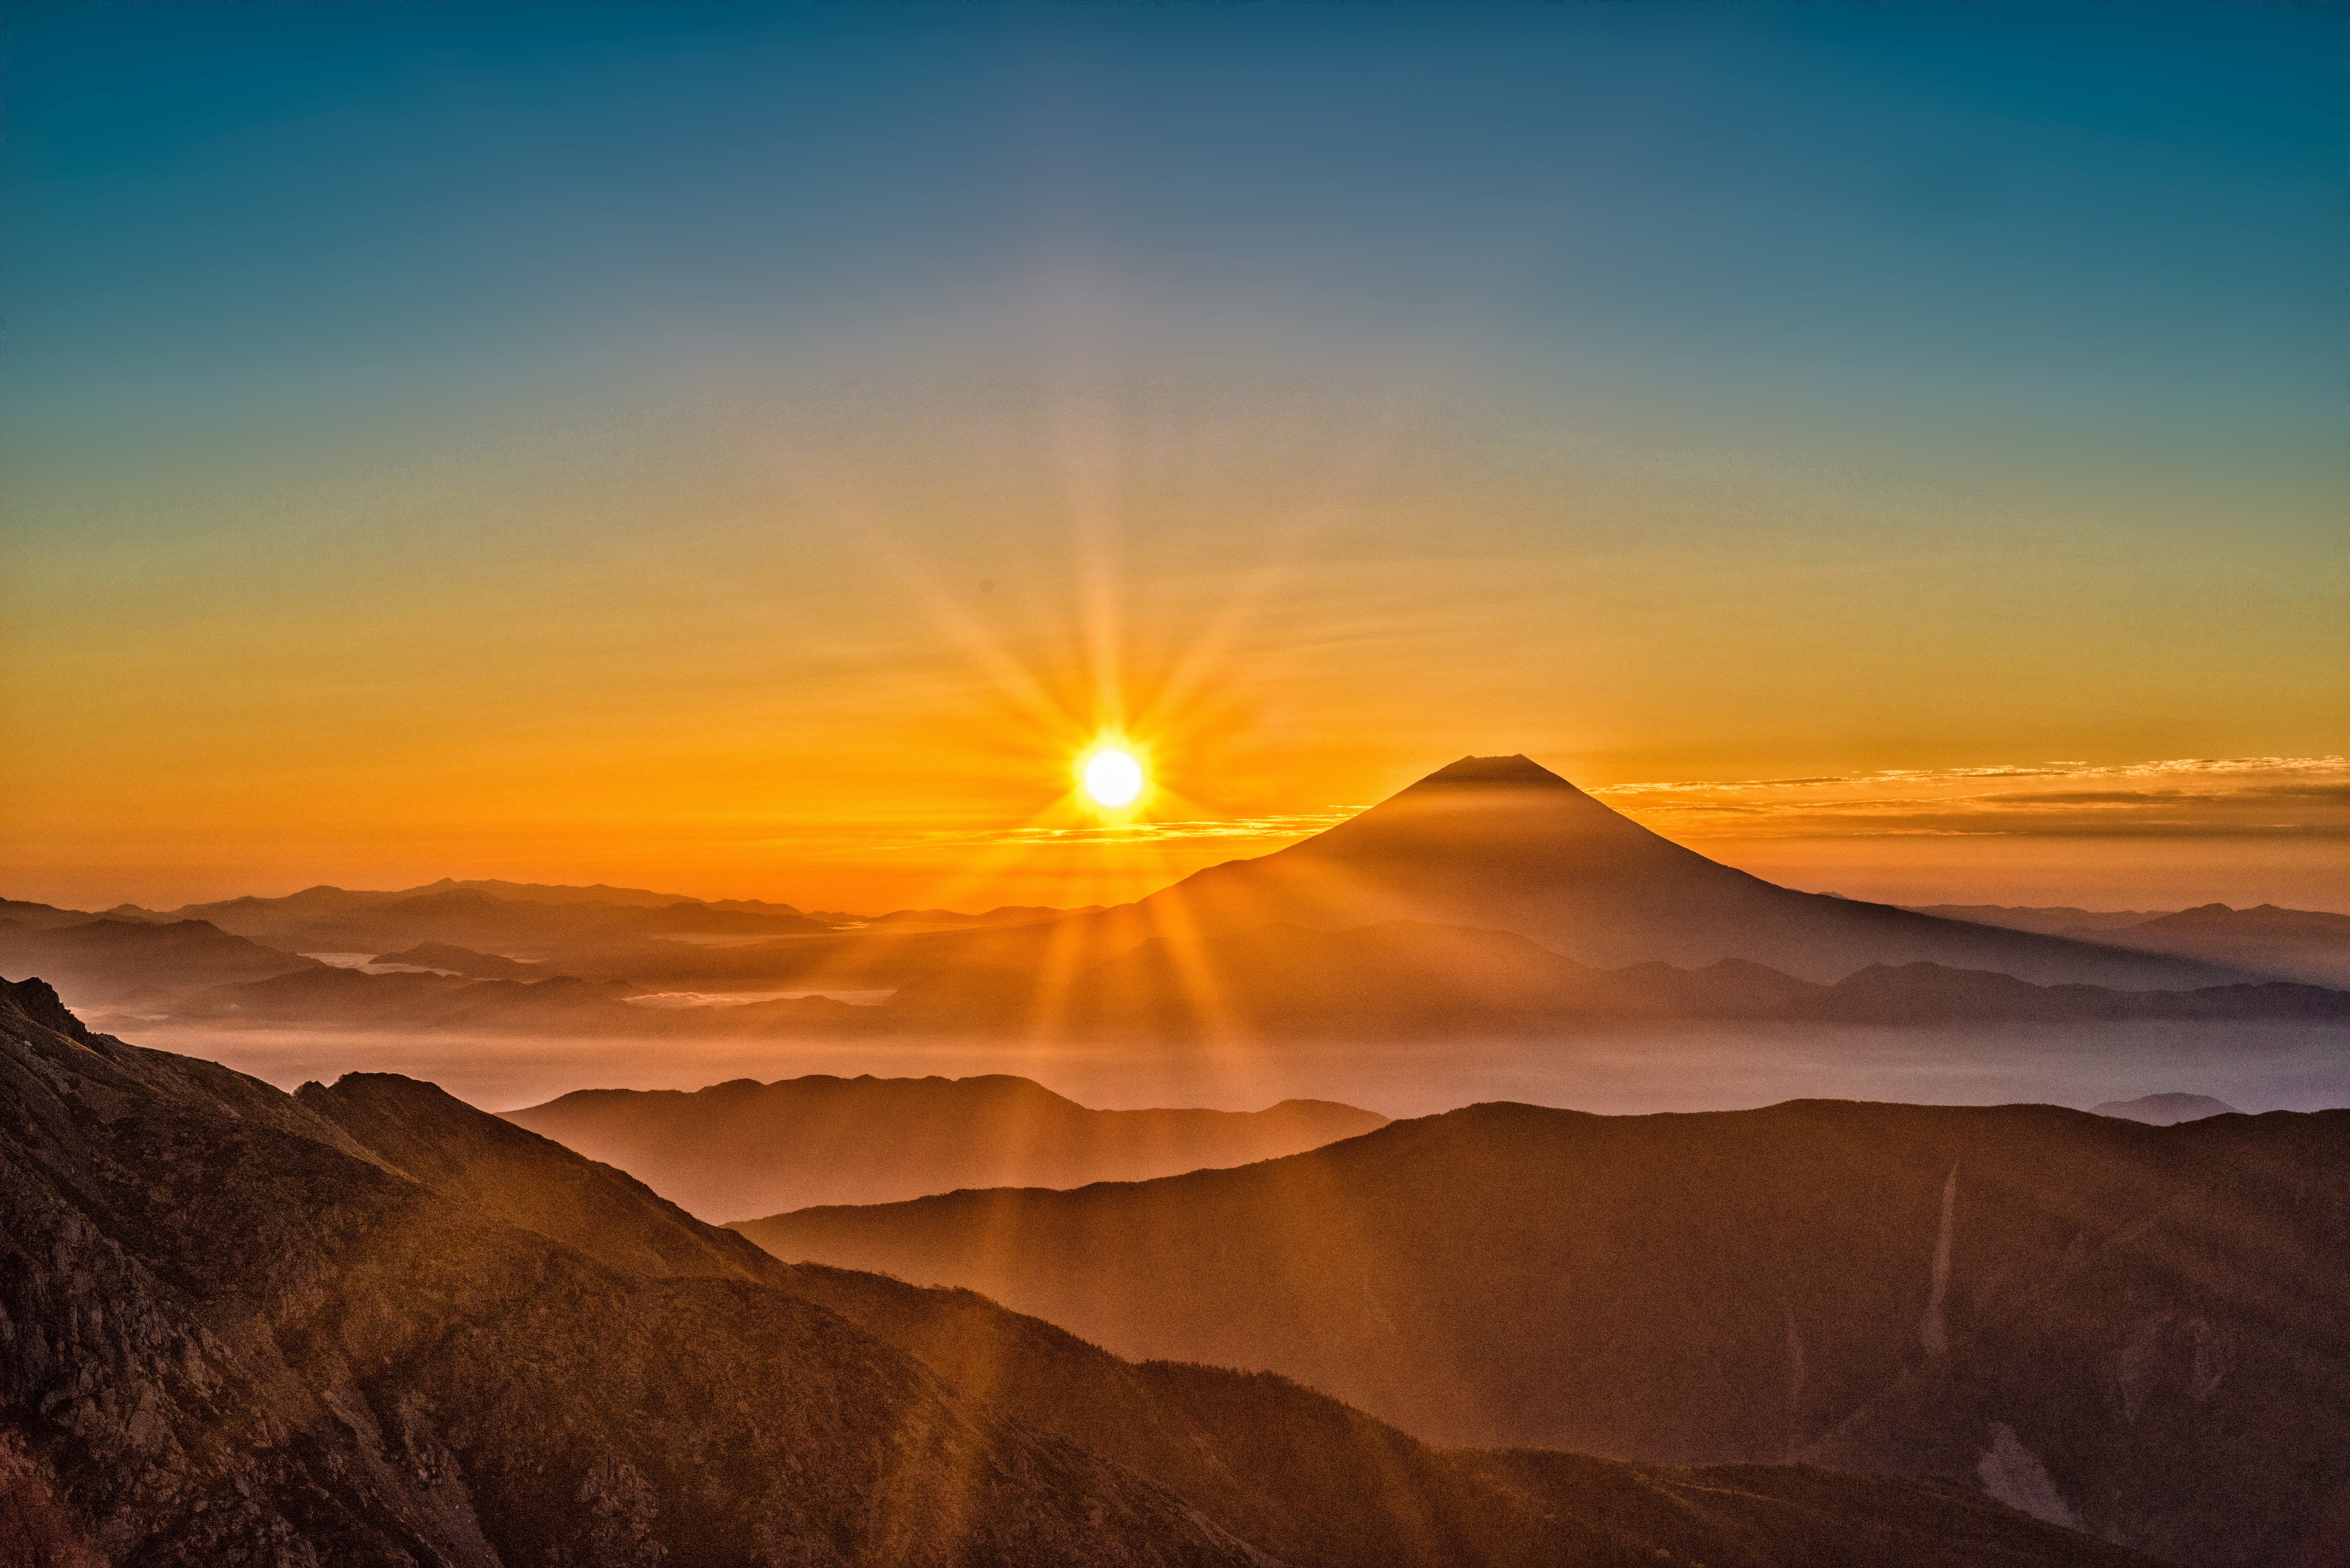 Sunrise over the Mount Fuji in the mountain landscape, Japan image ...